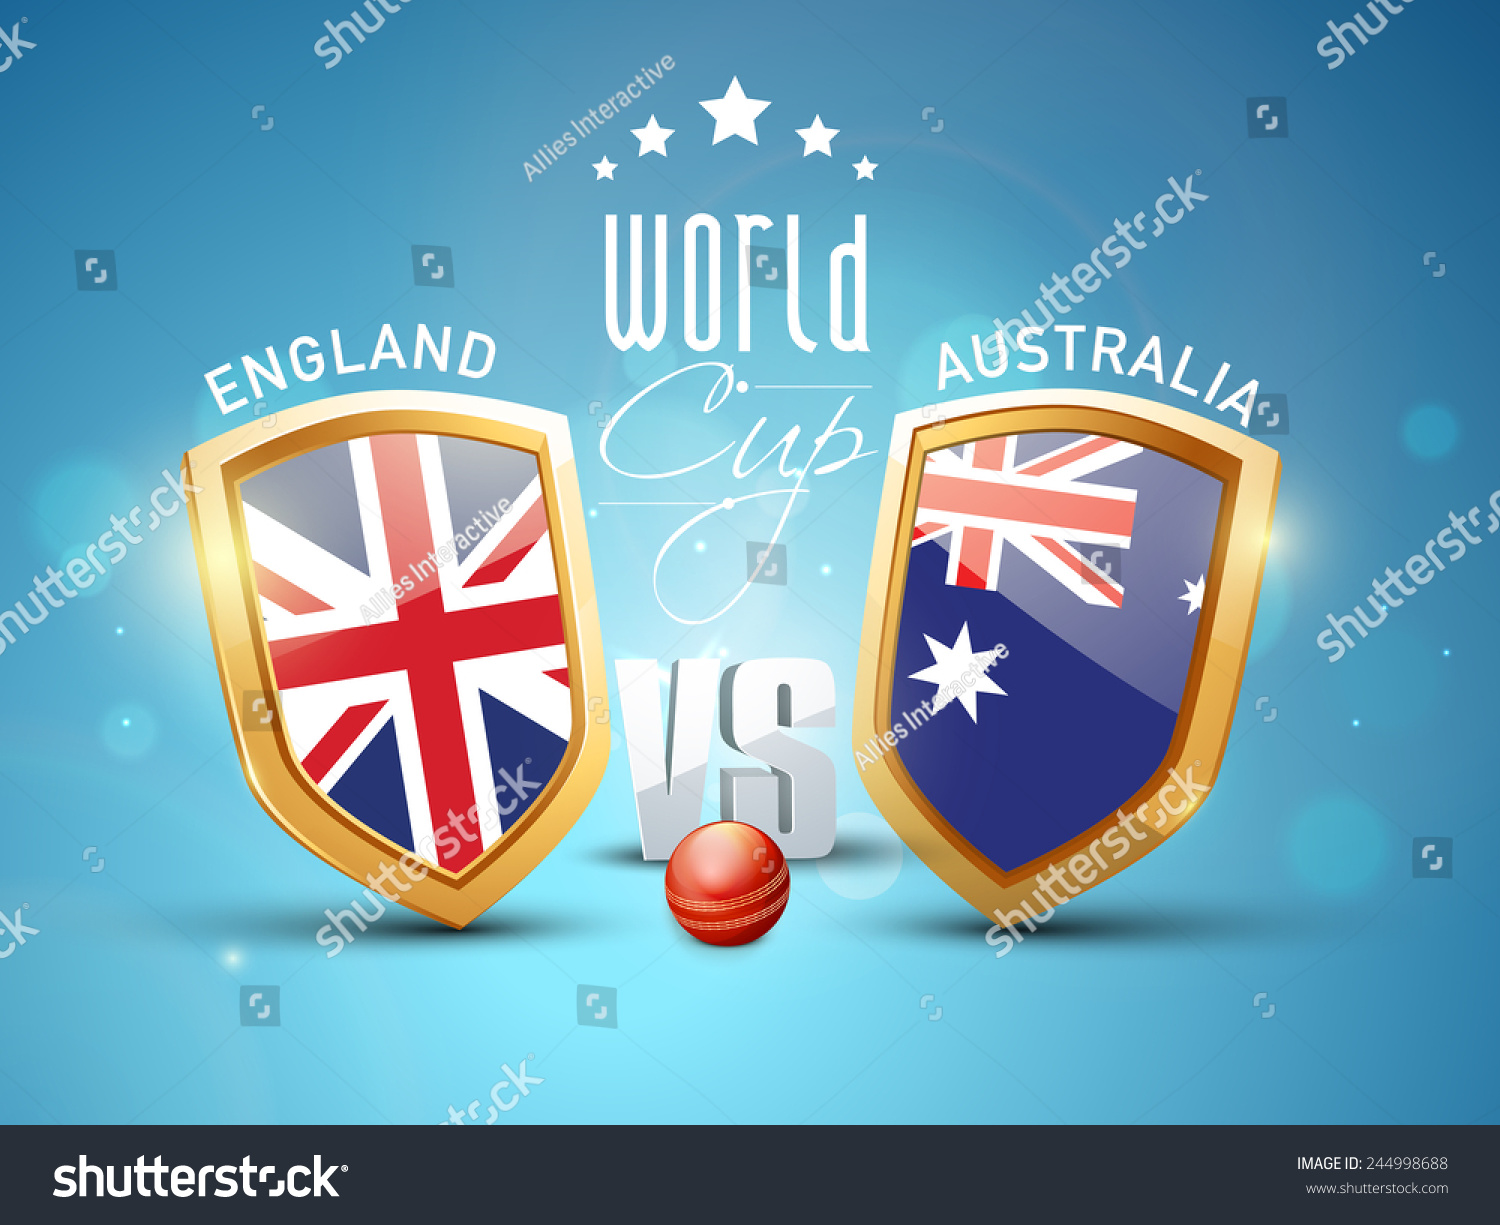 England Vs Australia, World Cup Cricket Match Concept With Winning